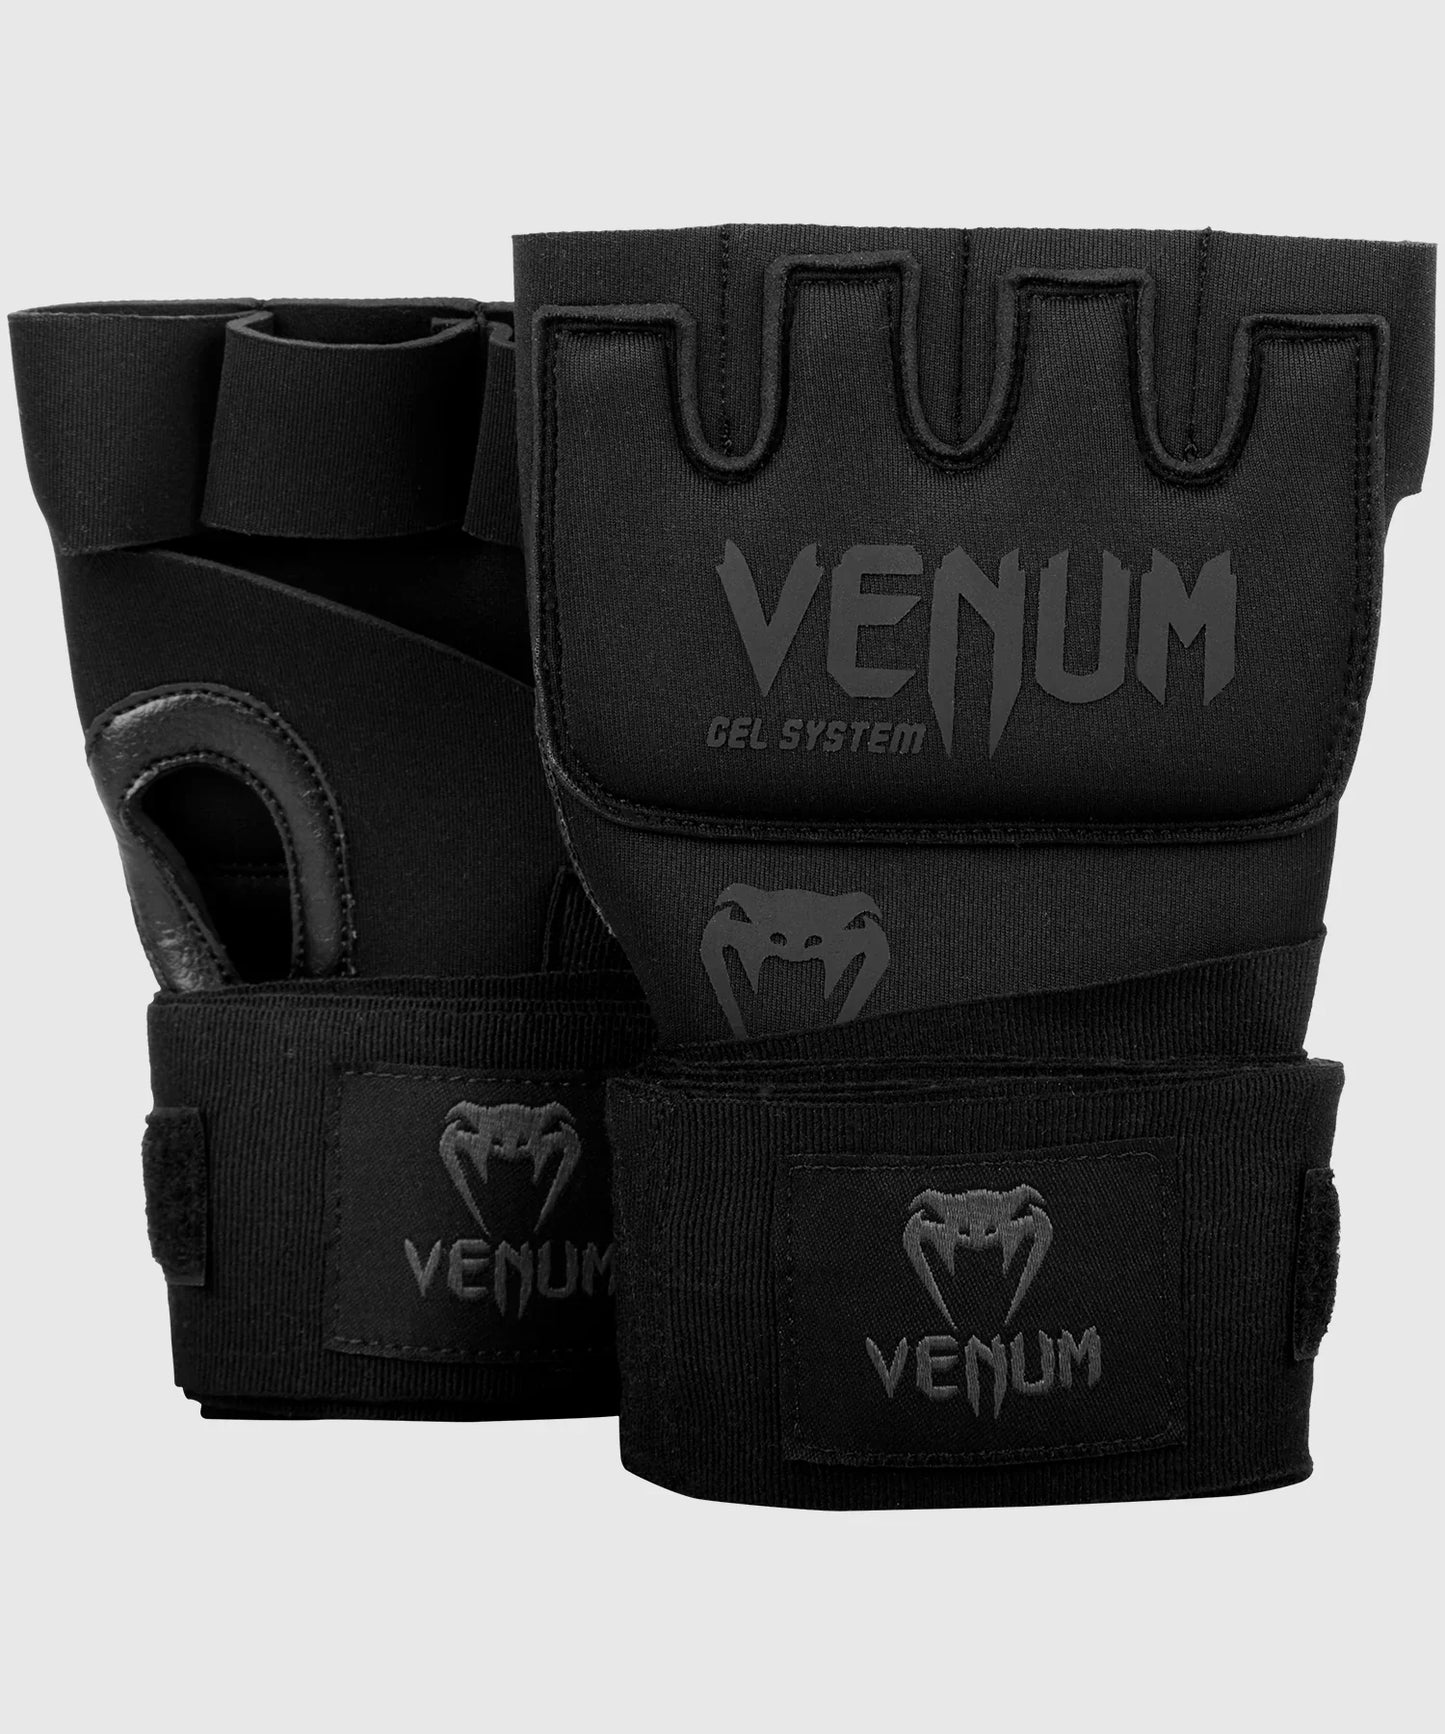 Venum Gel Kontact Quick Wraps - Black/Black